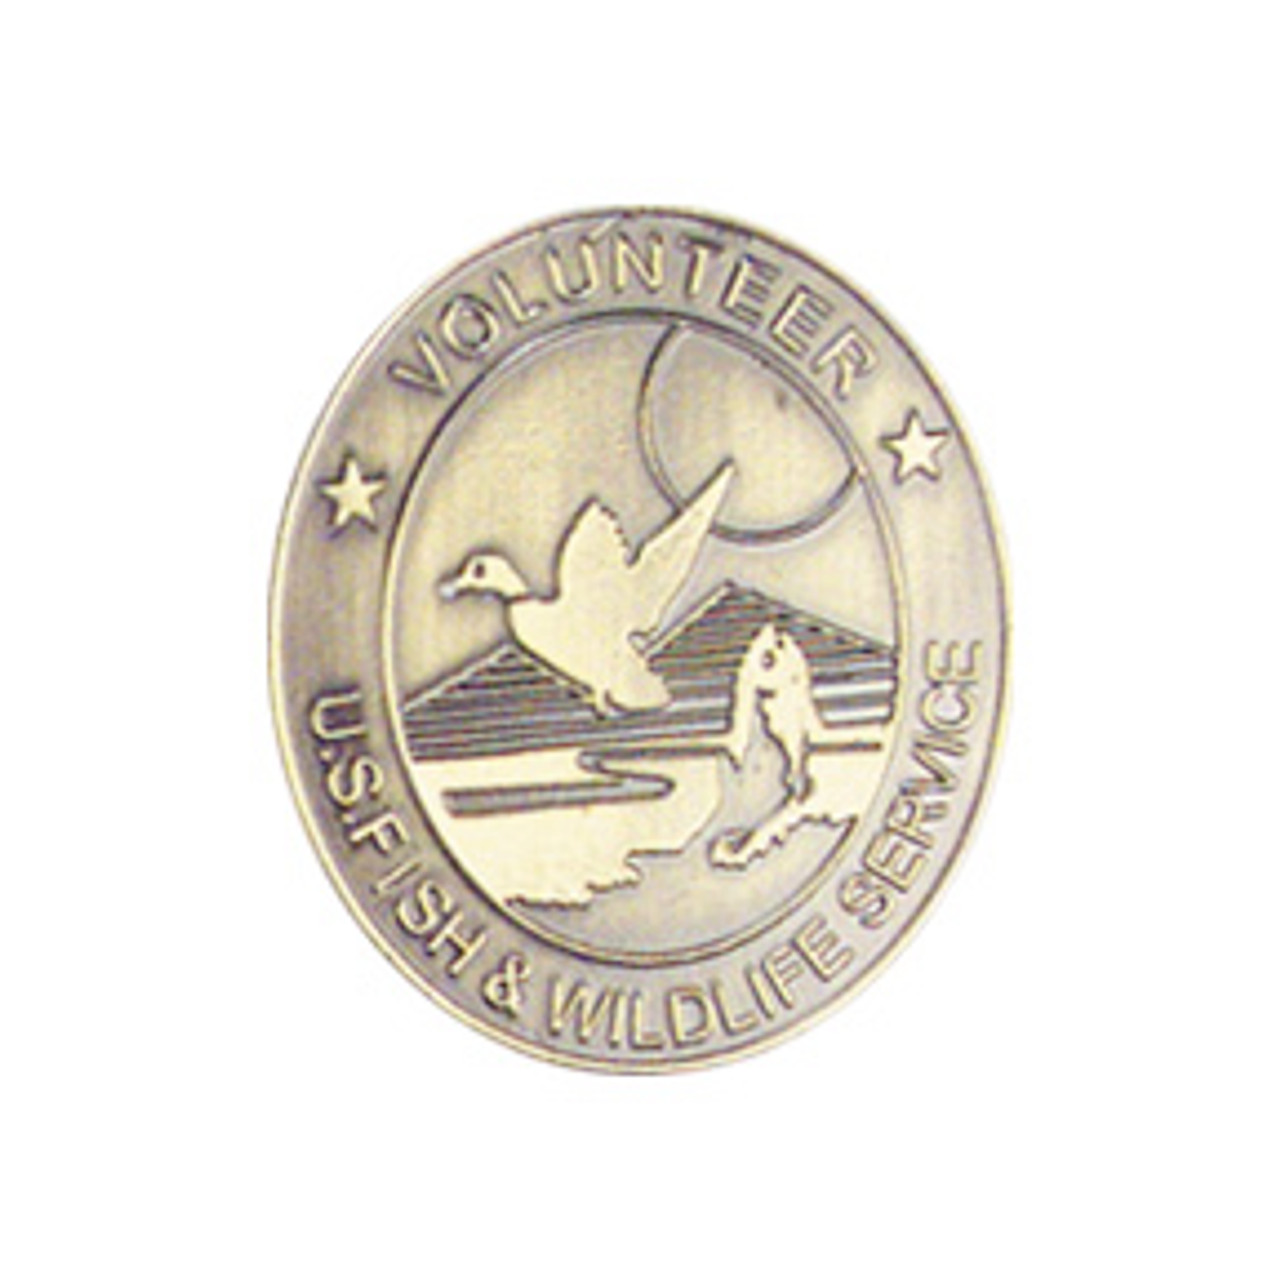 Fish & Wildlife Service Volunteer Medallion